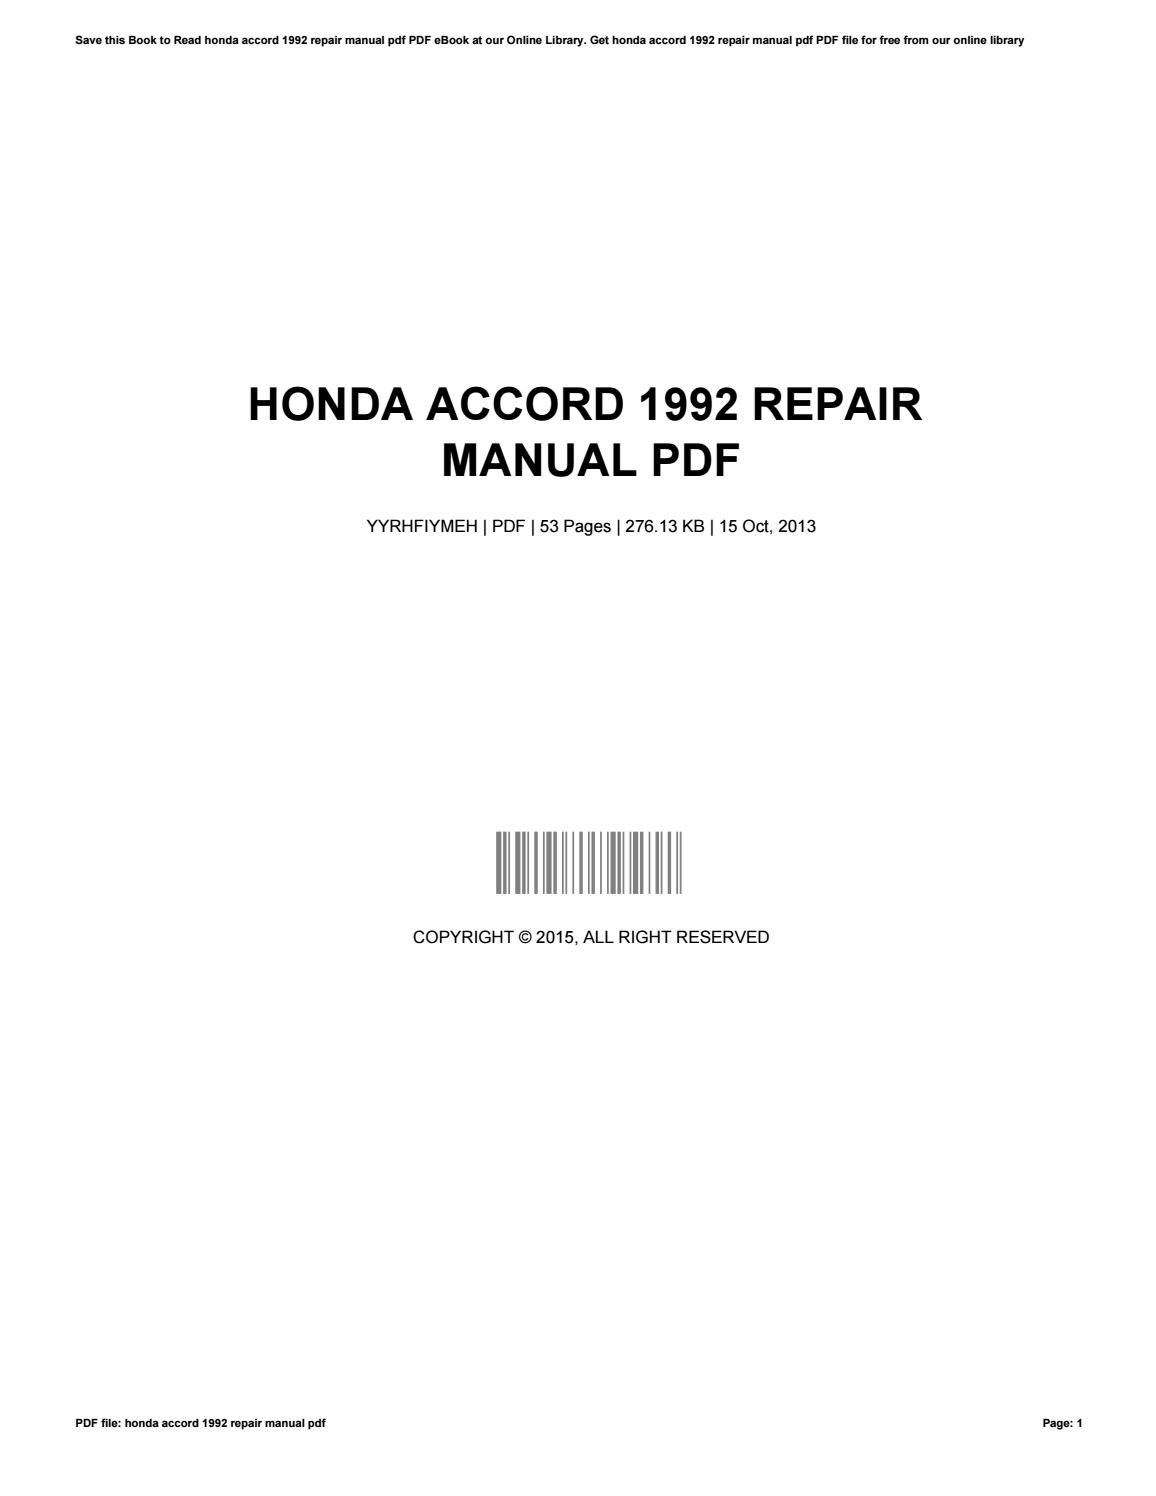 2003 honda accord repair manual